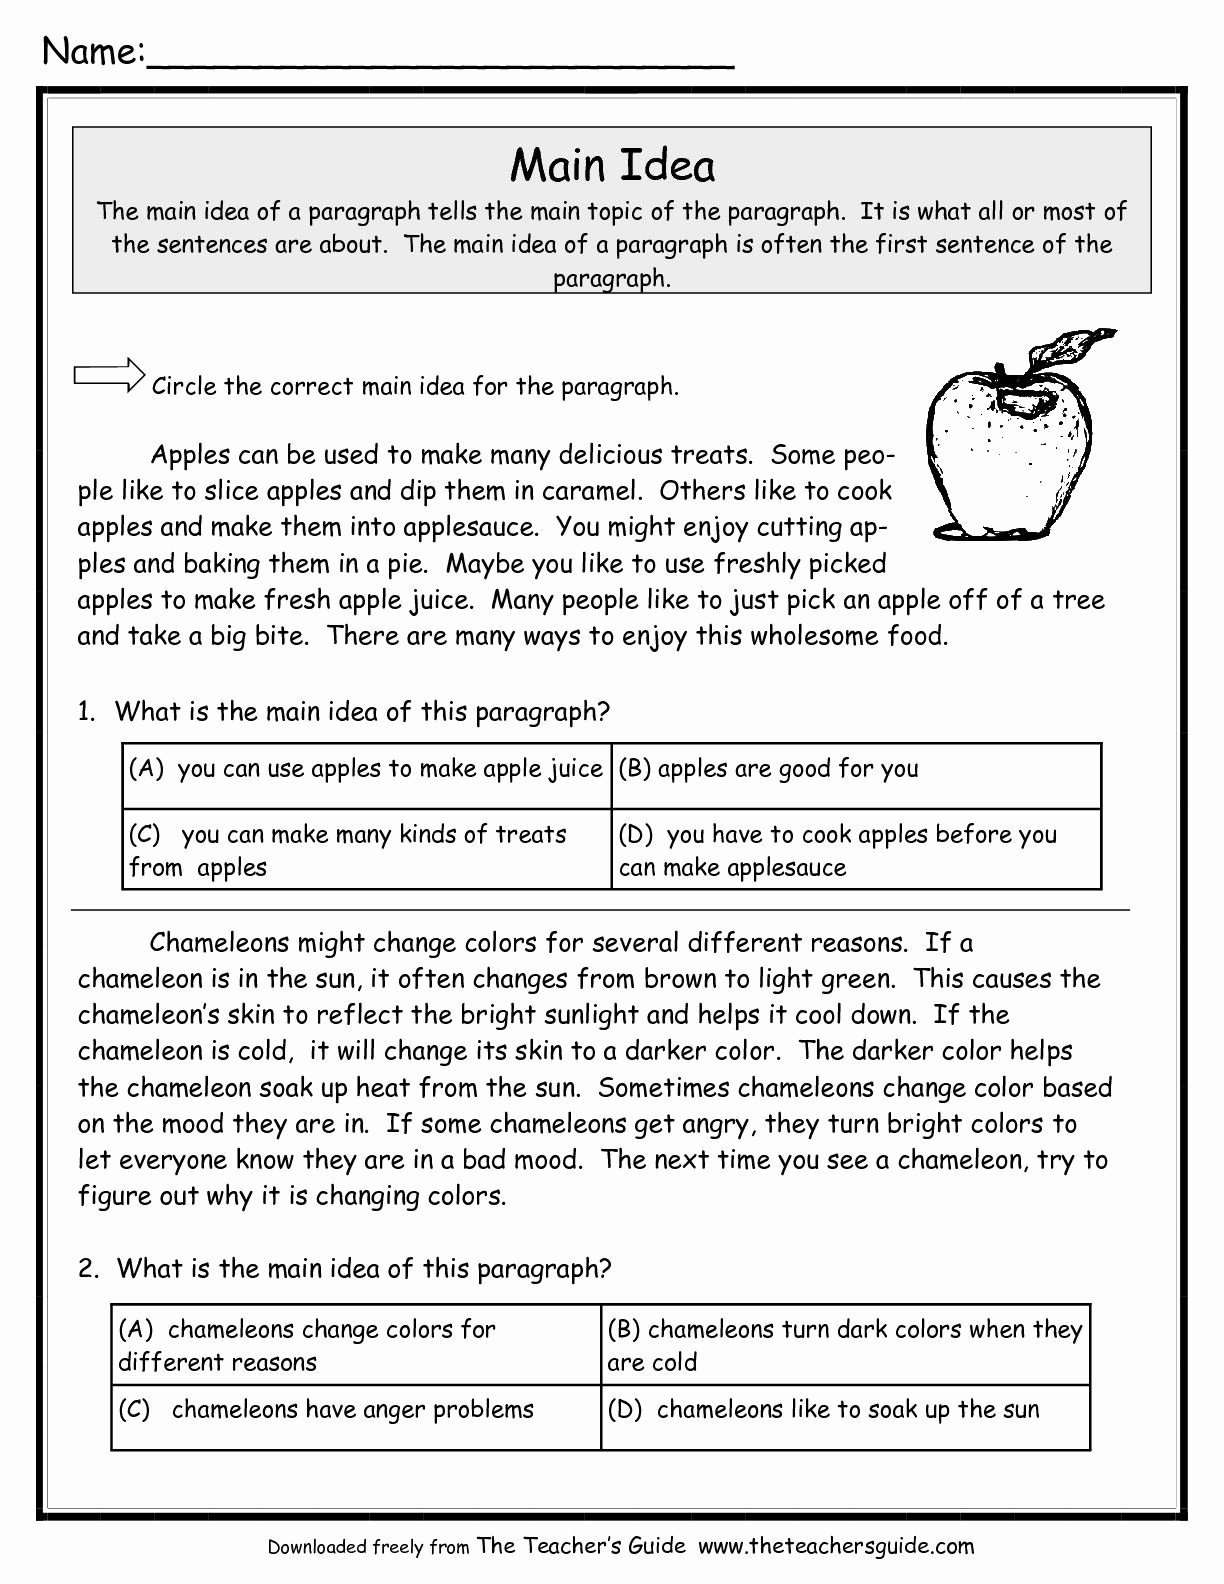 Main Idea Worksheet 4th Grade Beautiful Main Idea Worksheets From the Teacher S Guide